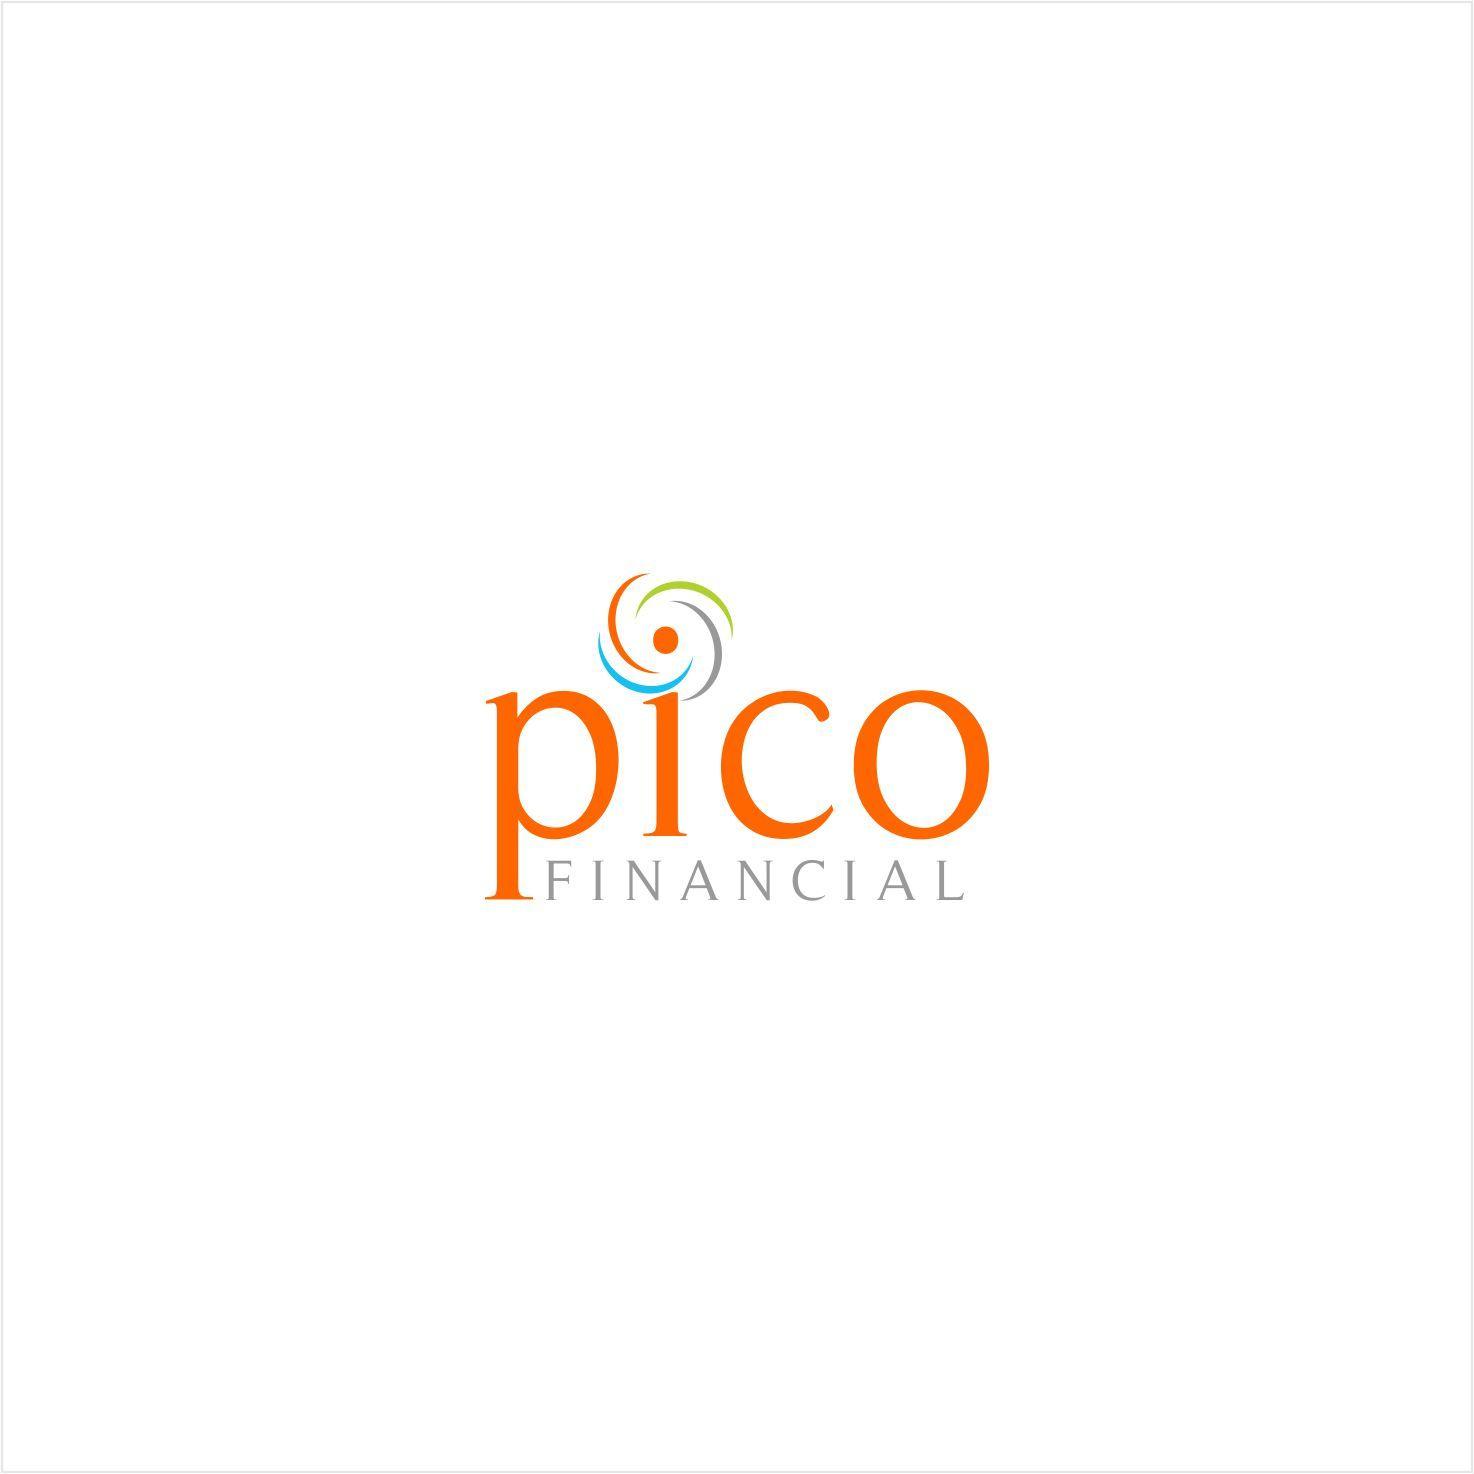 Pico Logo - Bold, Serious, Financial Logo Design for Pico Financial by tahib ...